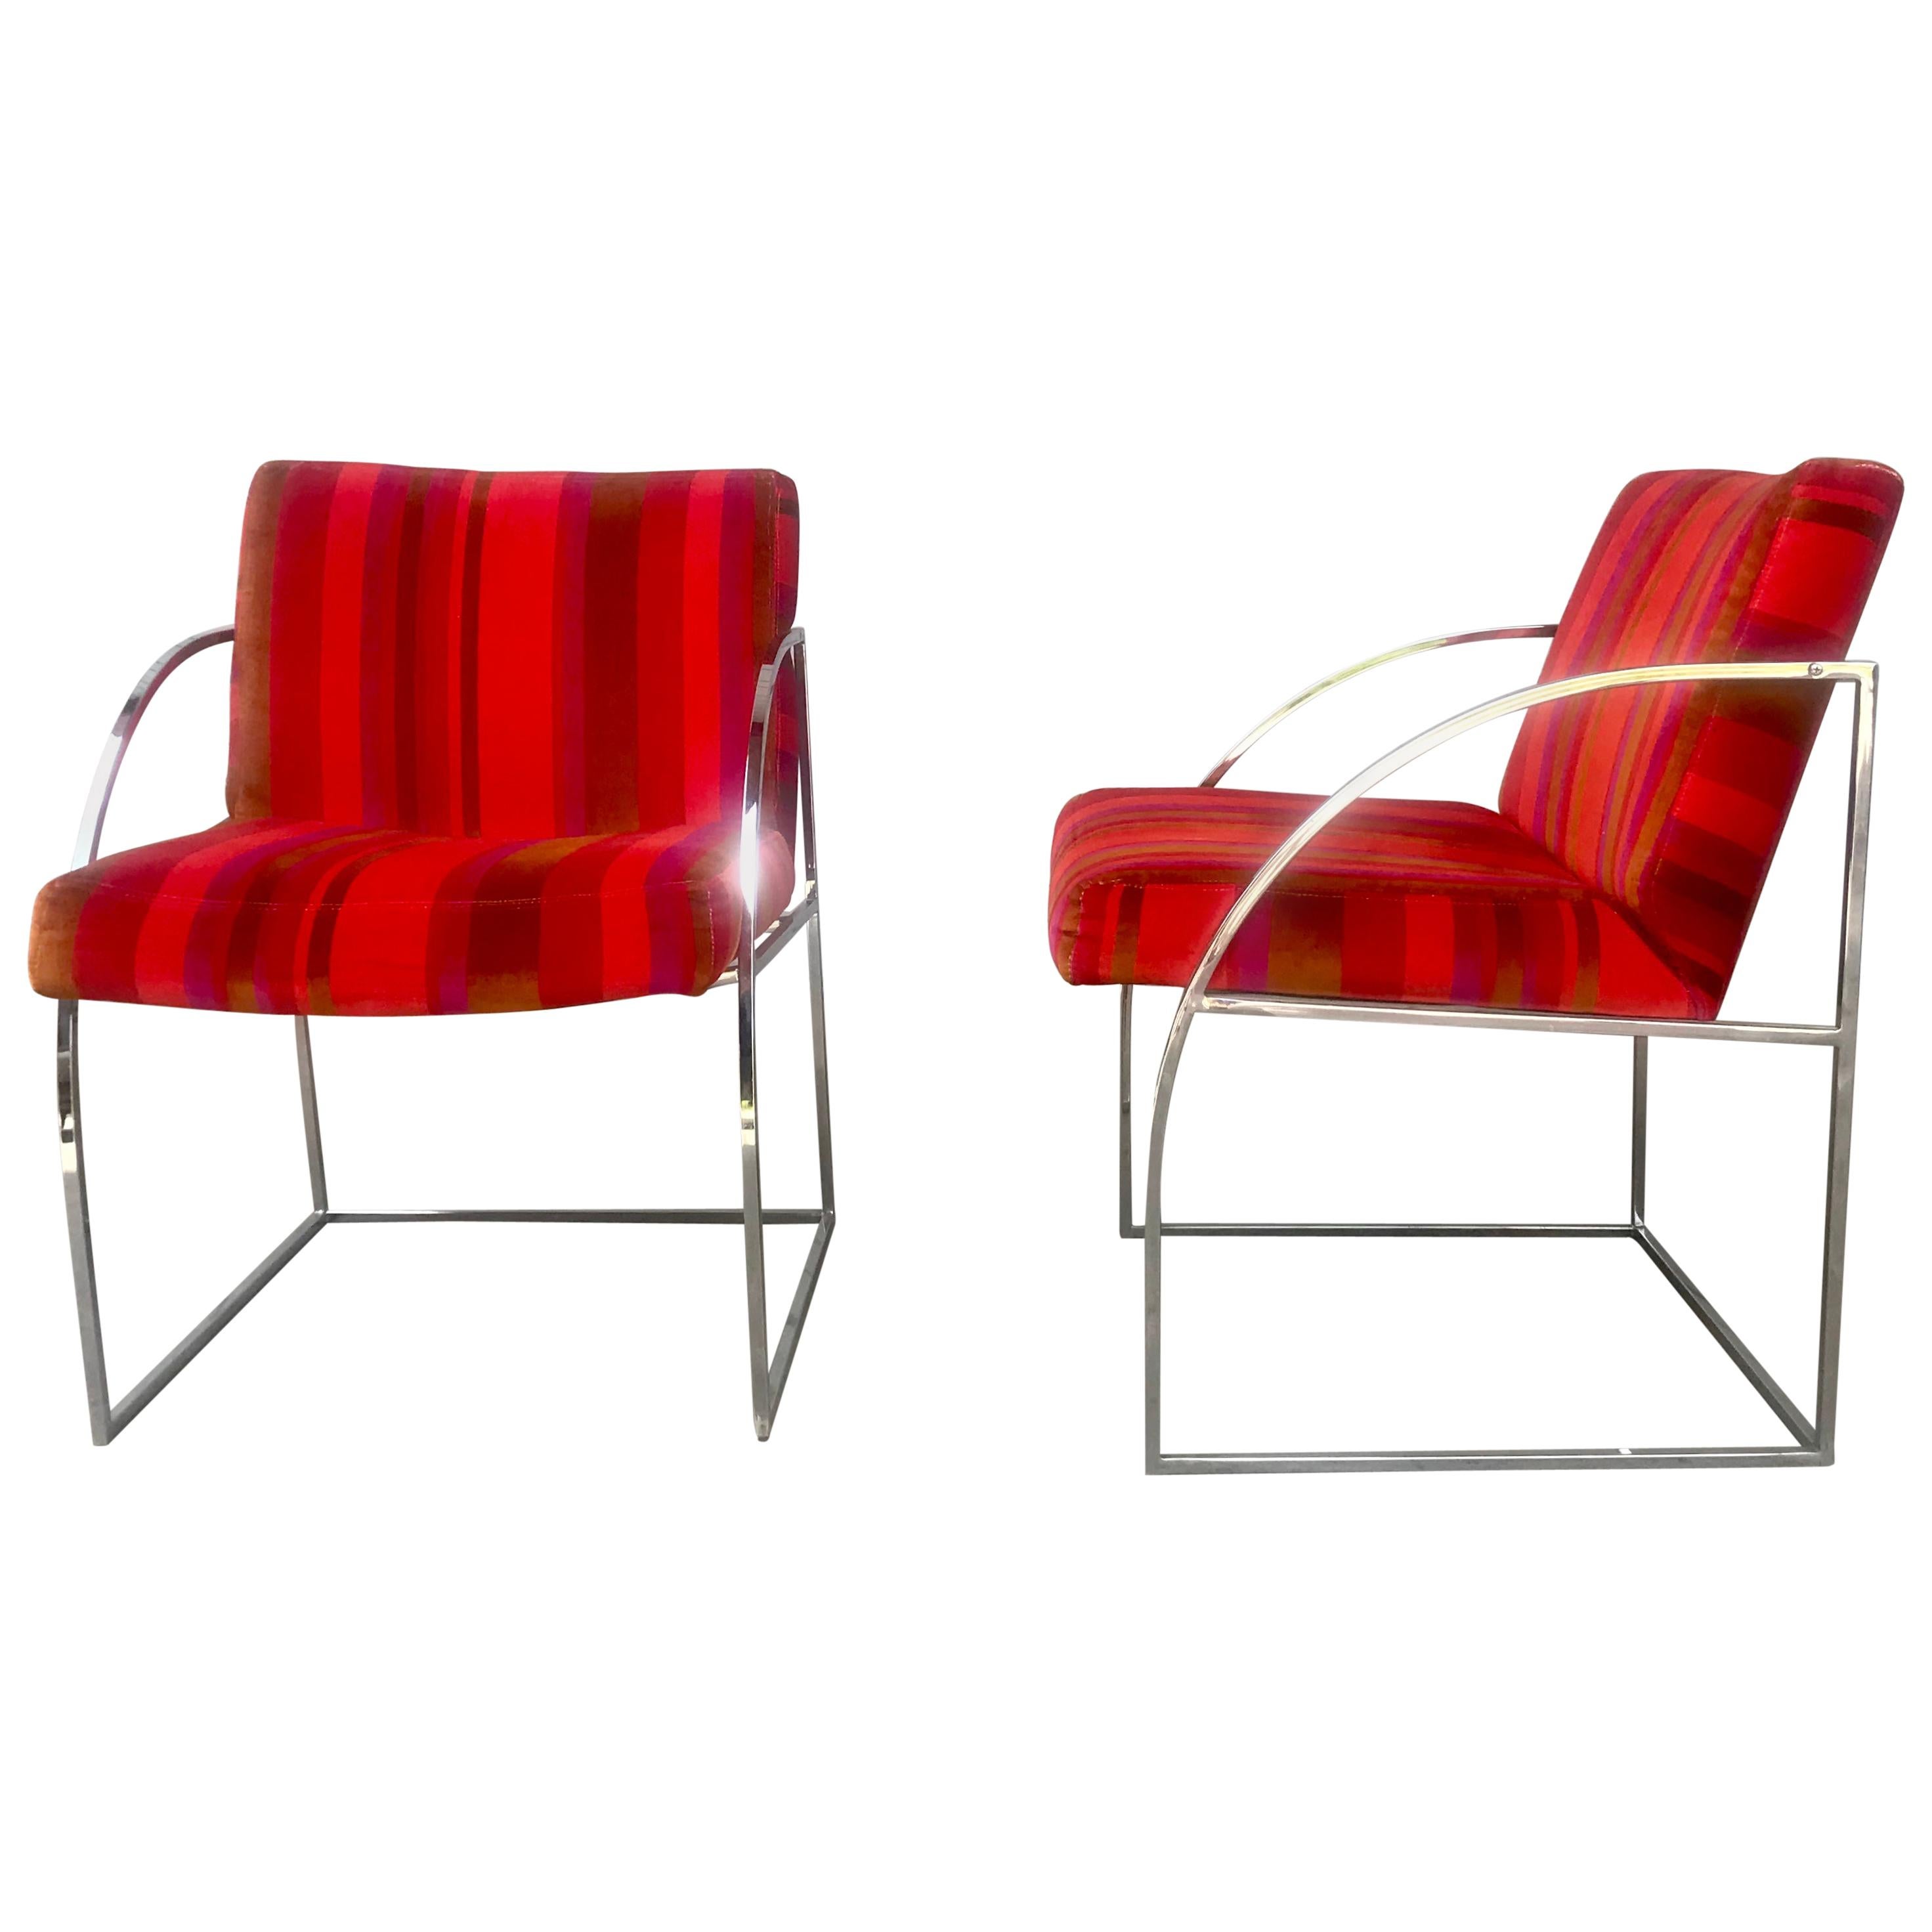 Stunning Pair of Chrome Milo Baughman Lounge Chairs, Alexander Girard Fabric